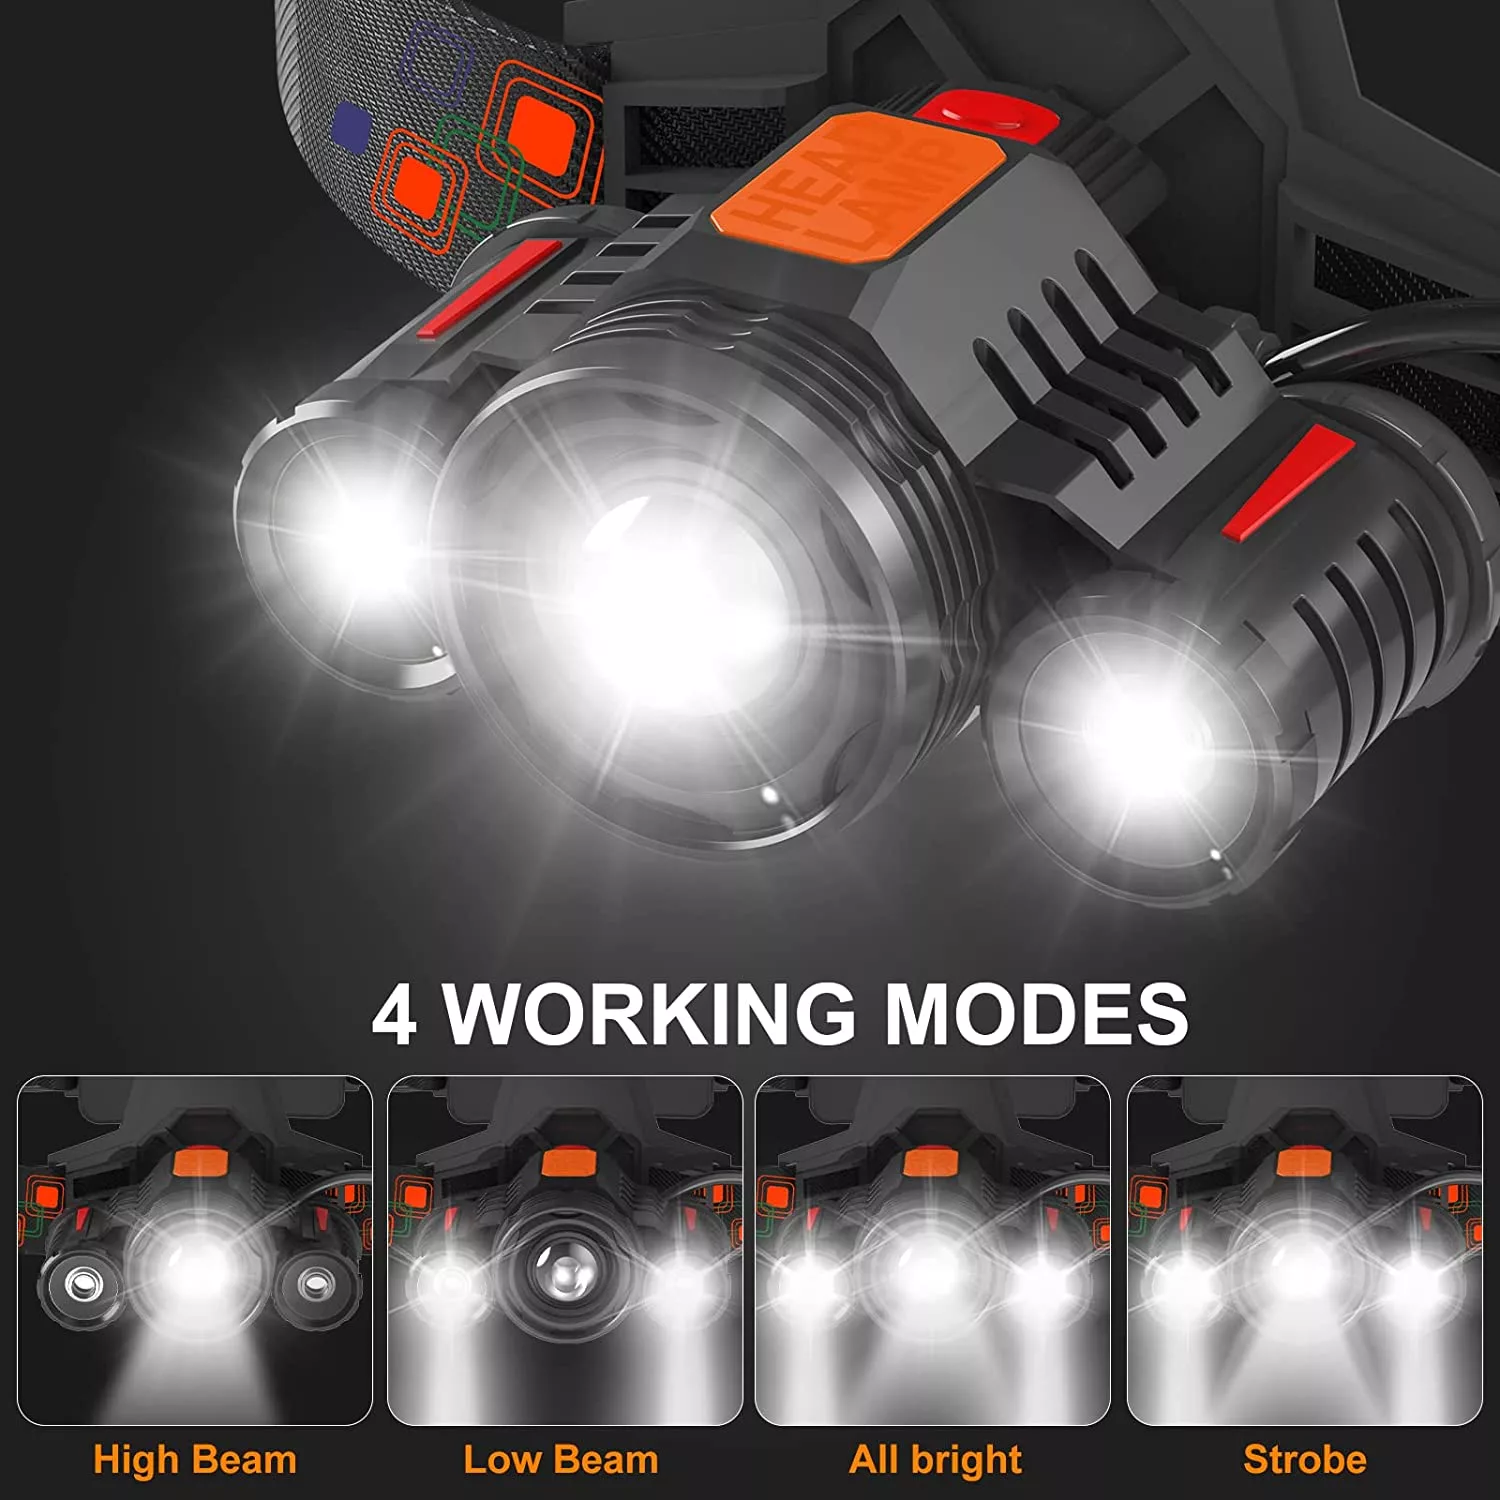 Soprut Brightest 6000 Lumen Headlight has four working modes